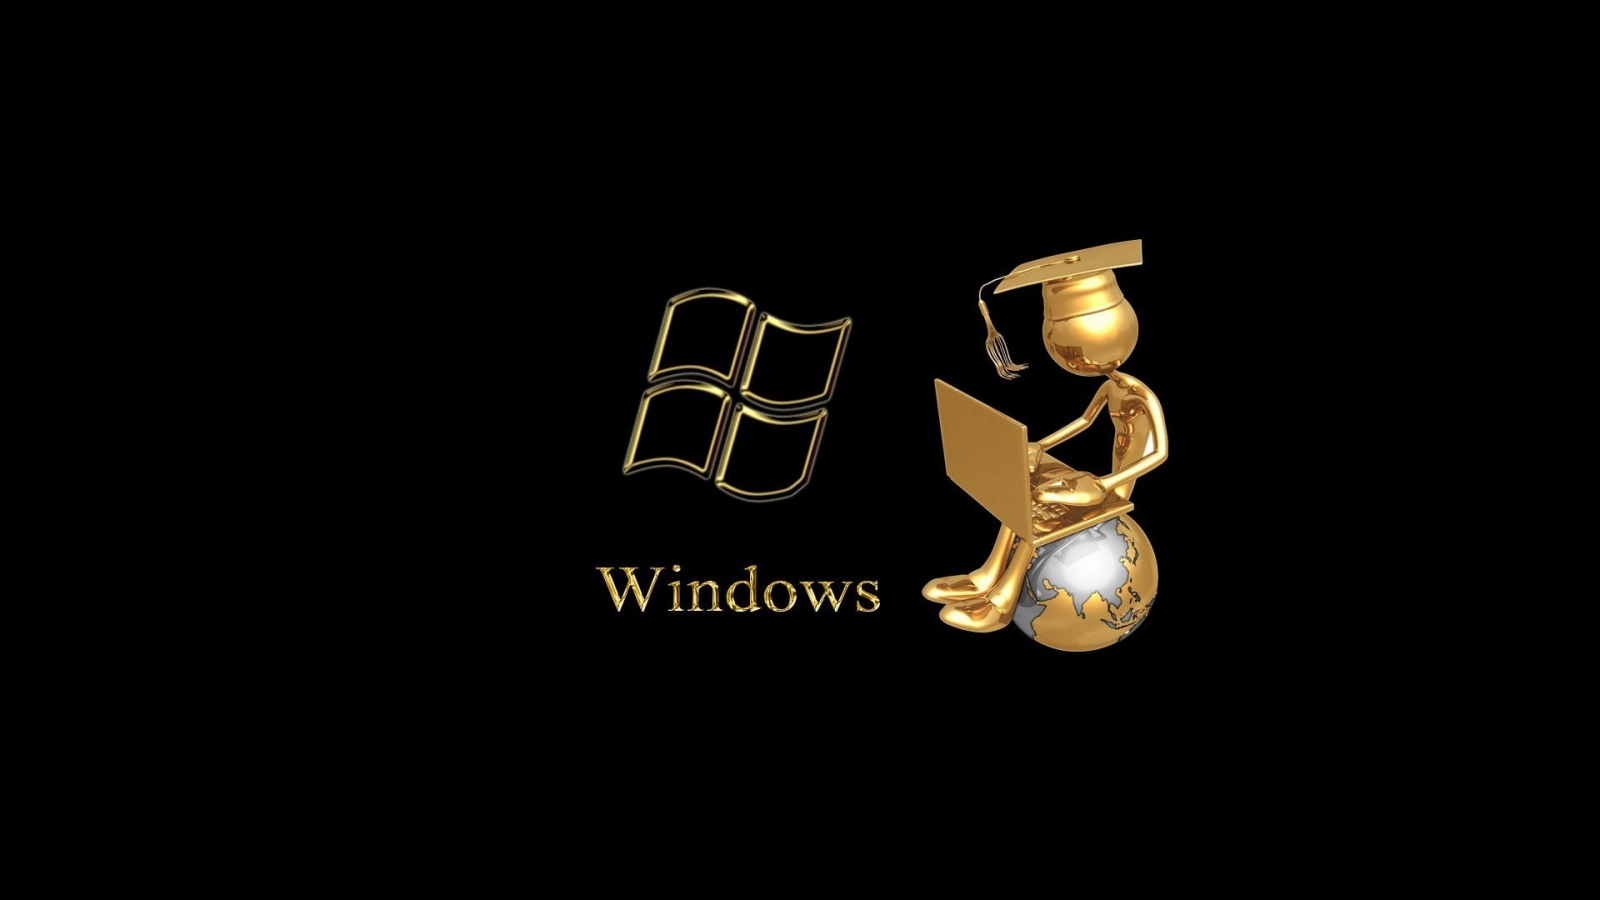 Windows Gold for 1600 x 900 HDTV resolution